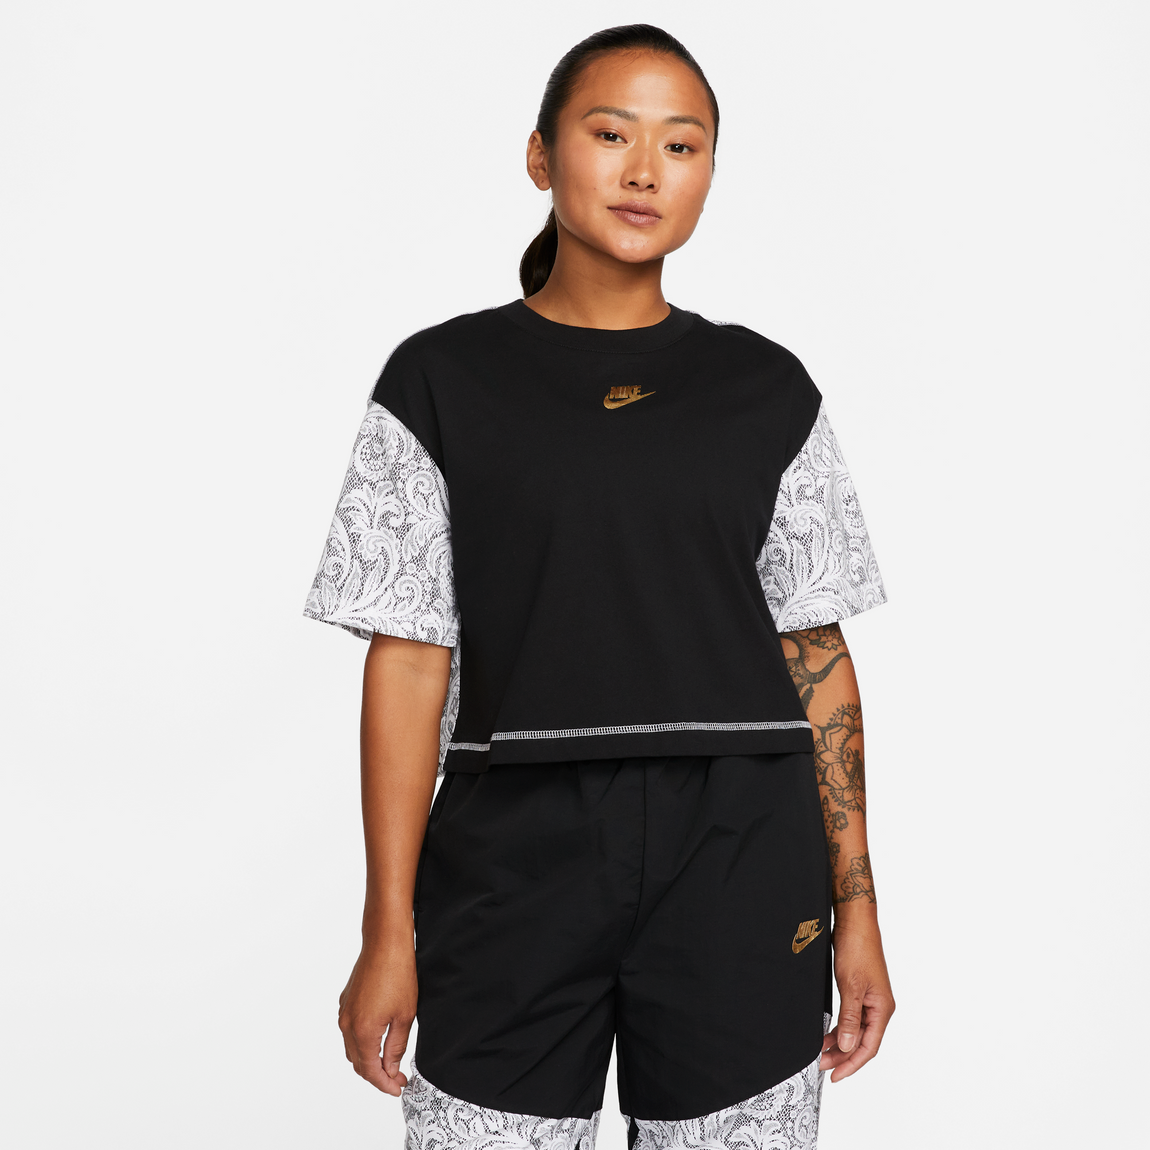 Nike Women's Serena Williams Design Crew Short-Sleeve Top (Black/Metallic Gold) - Nike Women's Serena Williams Design Crew Short-Sleeve Top (Black/Metallic Gold) - 